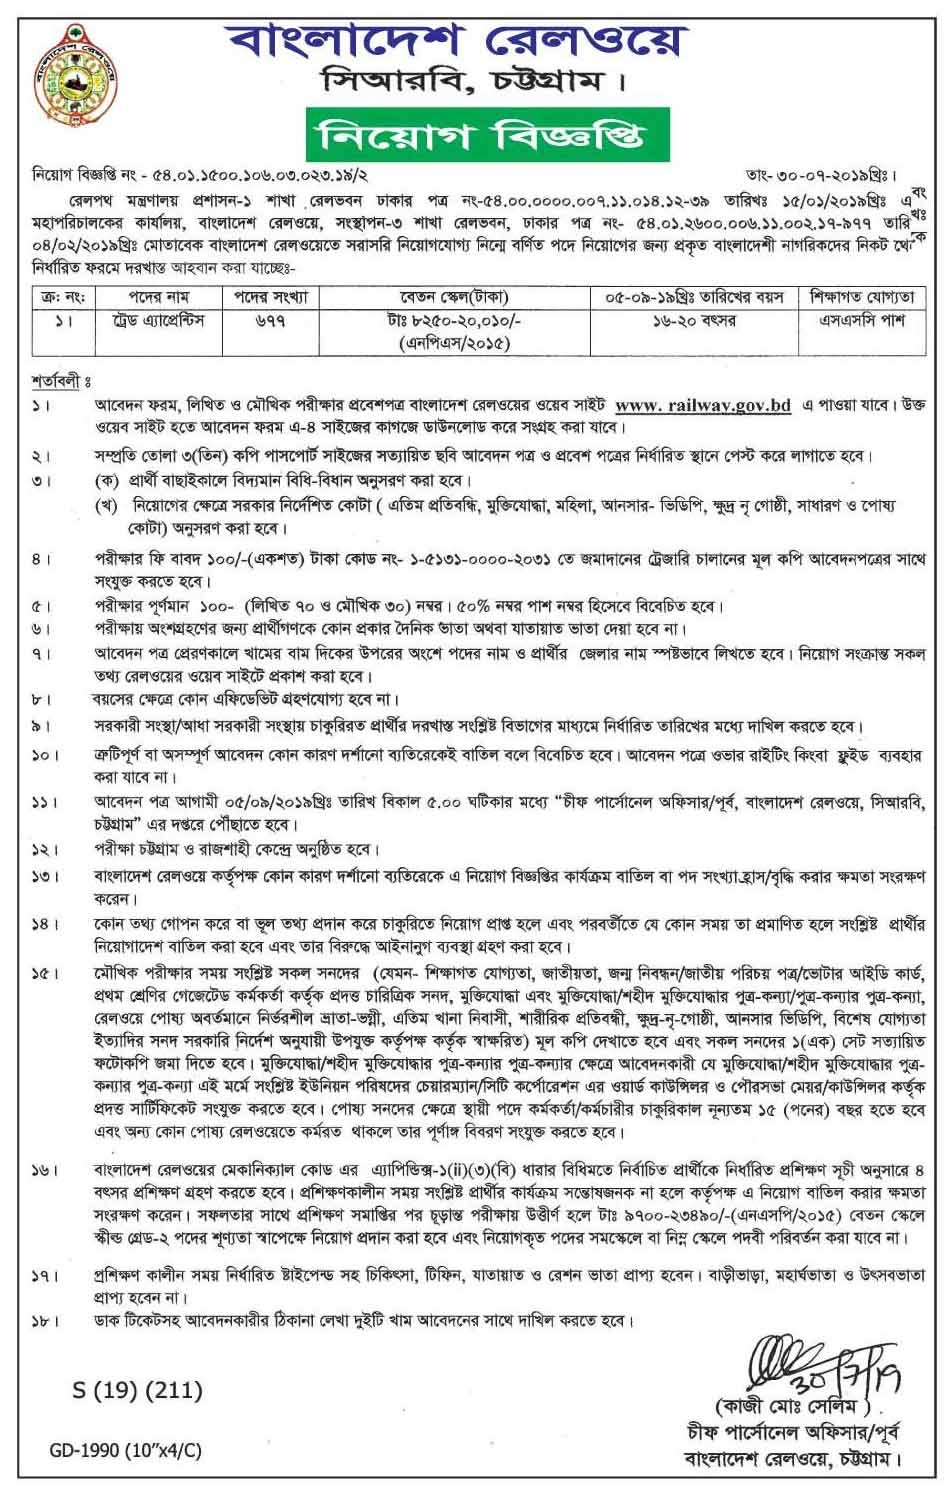 Bangladesh Railway Job Circular